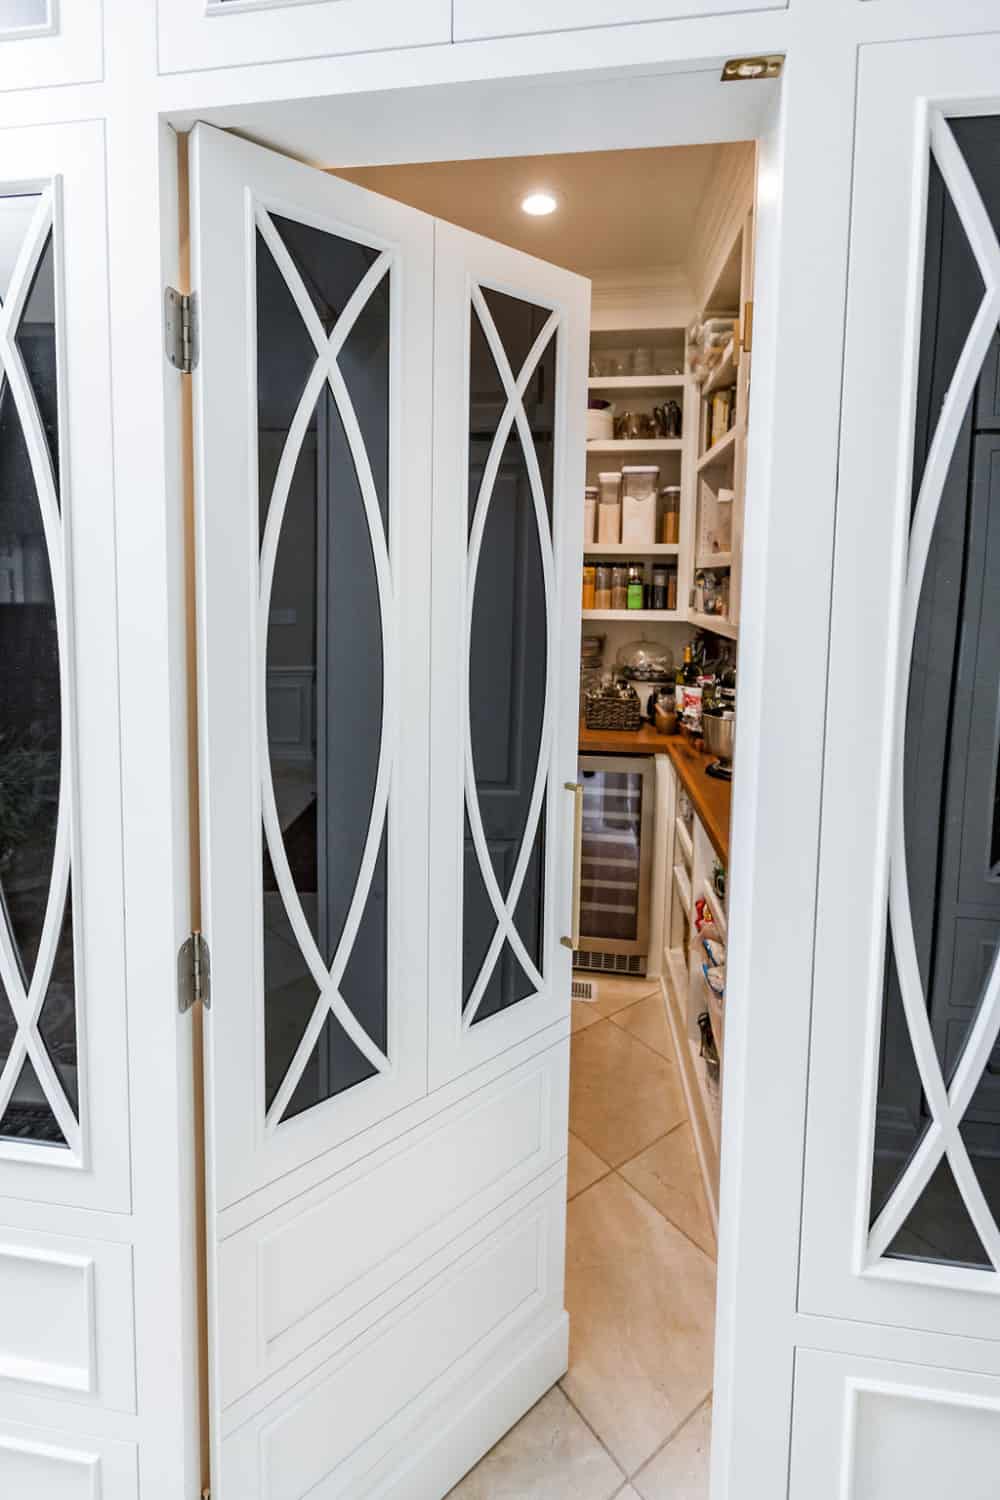 Nicholas Design Build | Remodel a white kitchen door with a glass door.